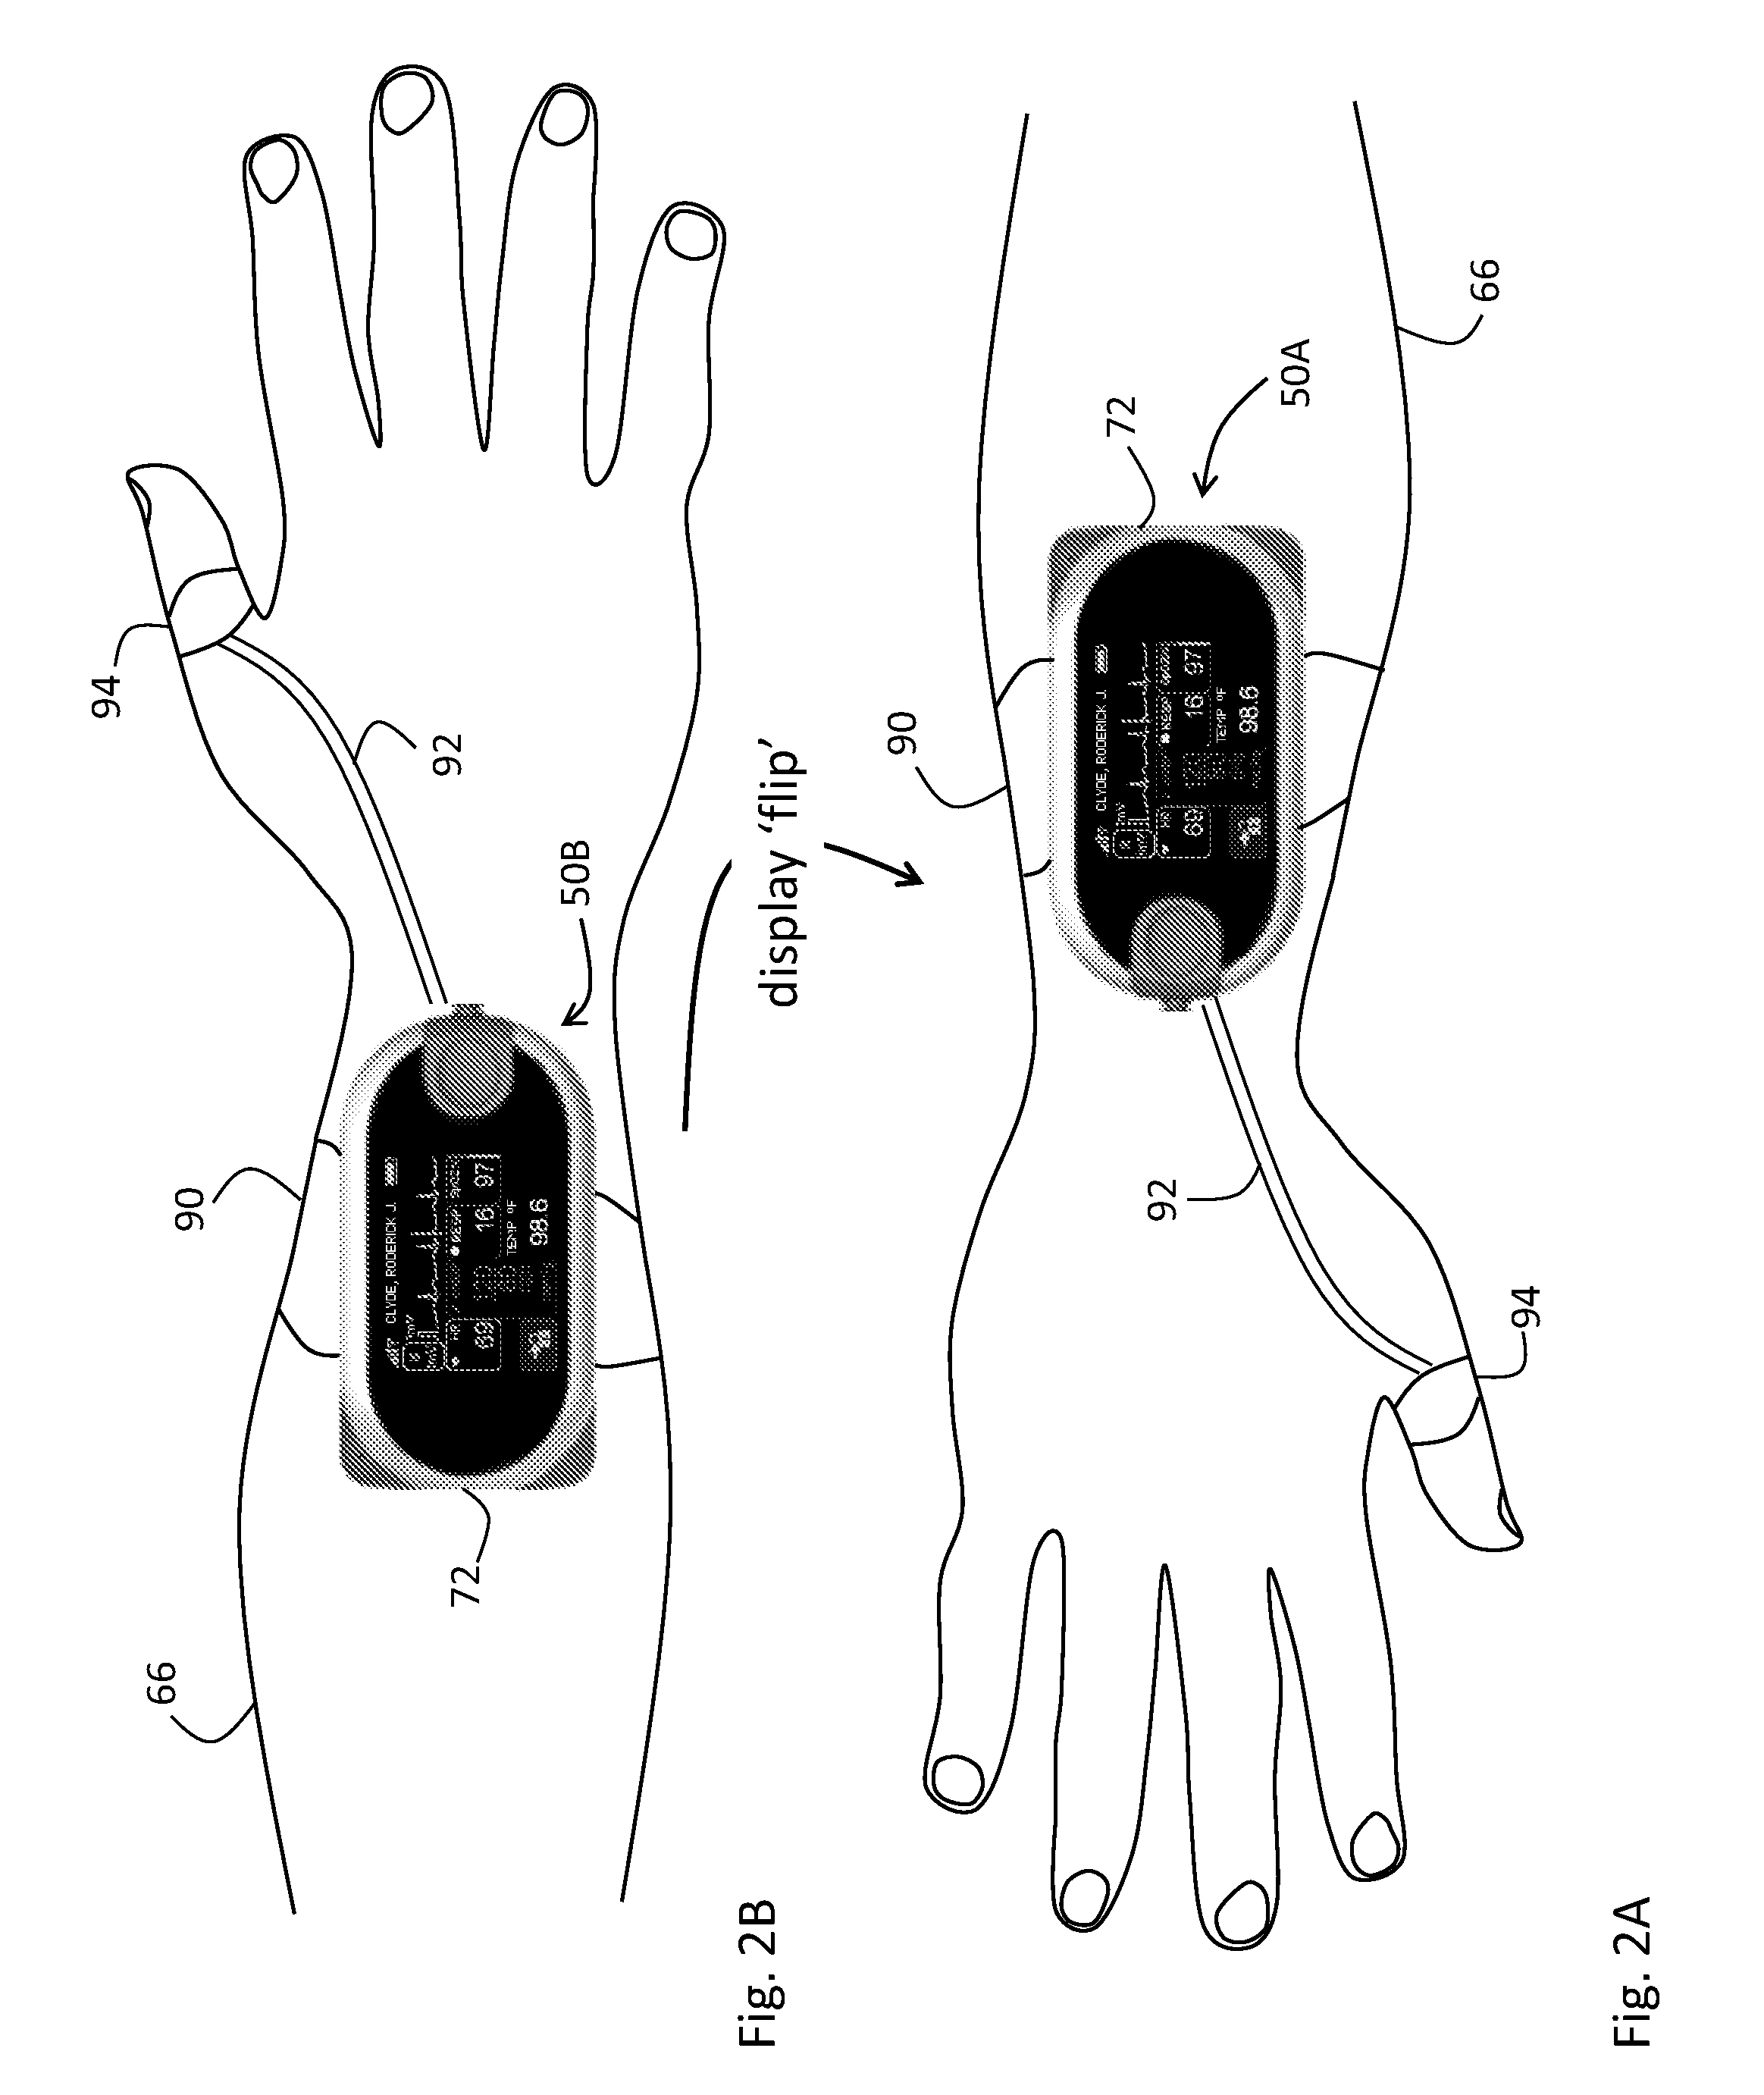 Body-worn vital sign monitor